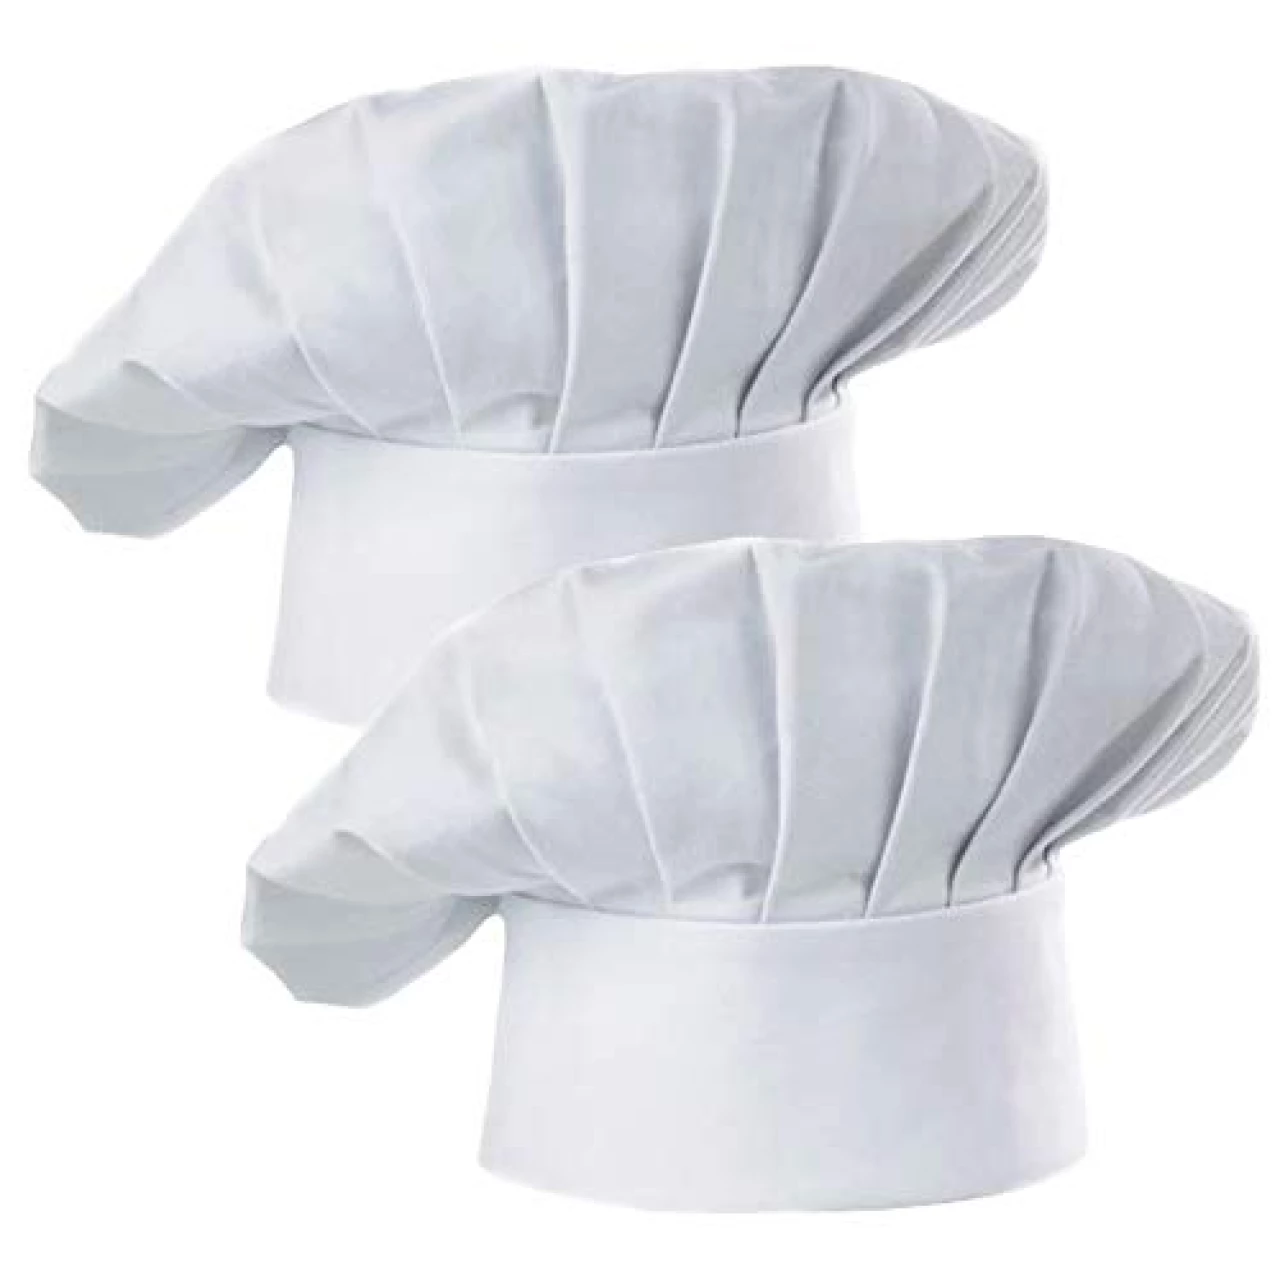 Hyzrz Chef Hat Set of 2 Pack Adult Adjustable Elastic Baker Kitchen Cooking Chef Cap (White)